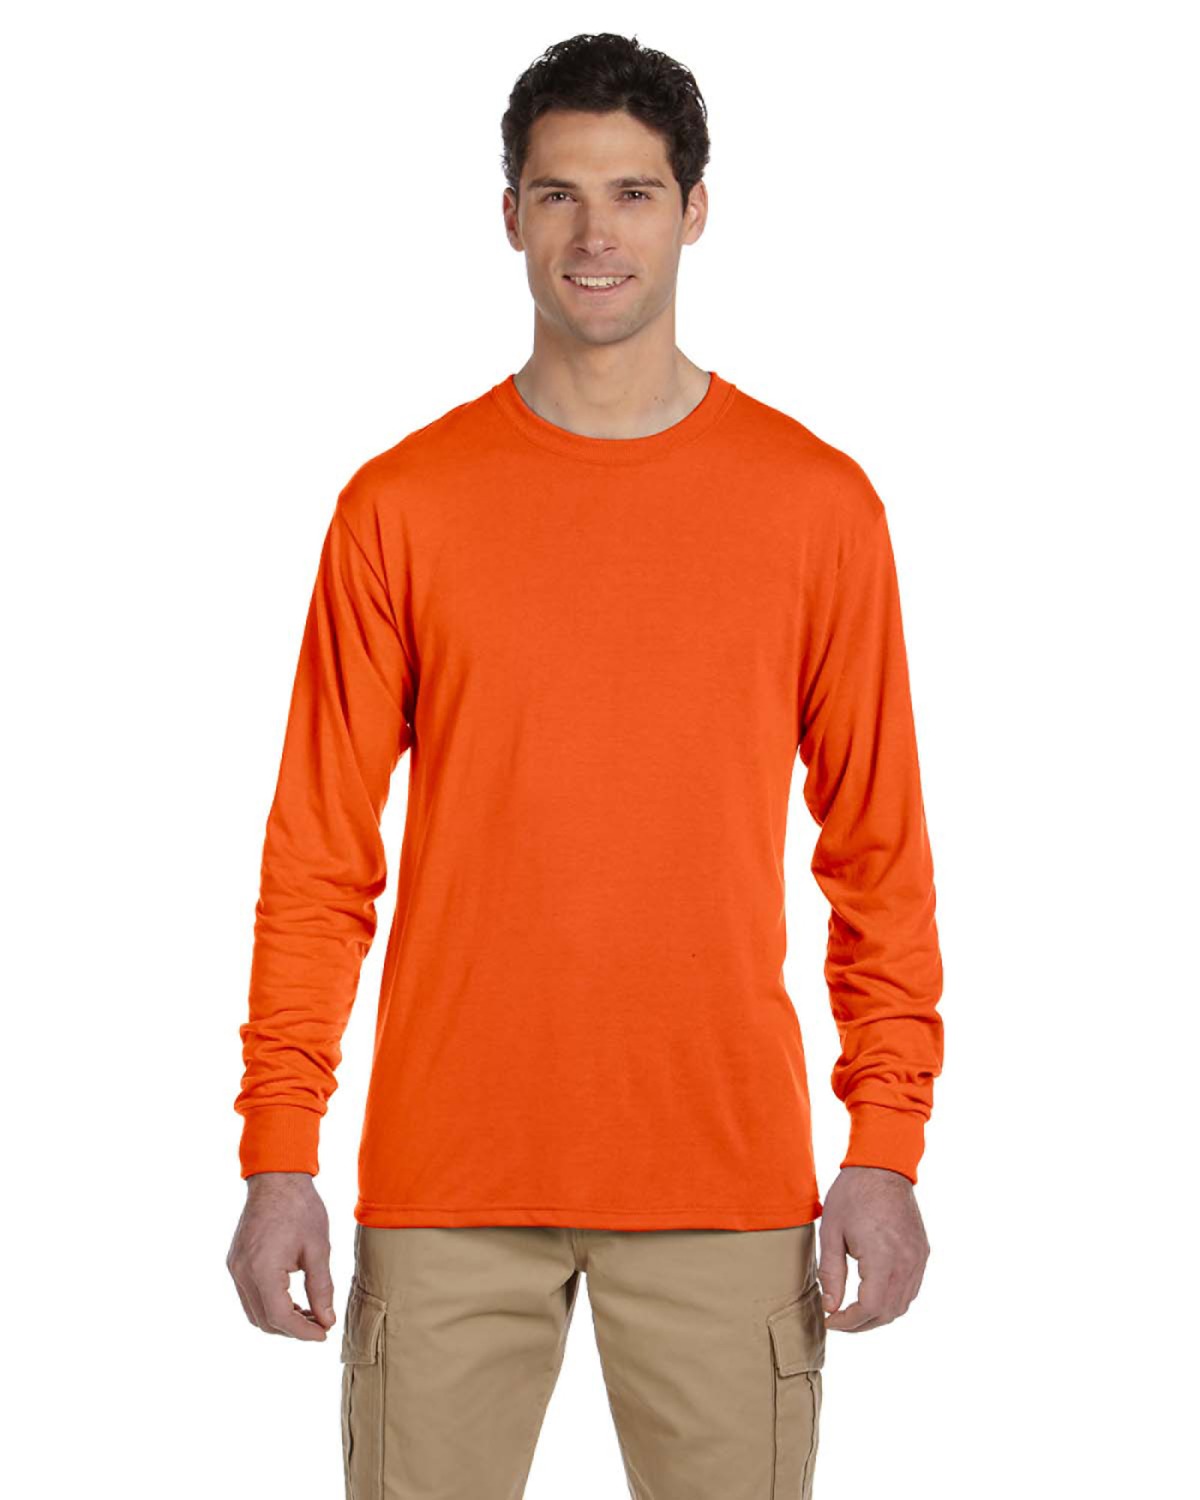 orange dri fit long sleeve shirt